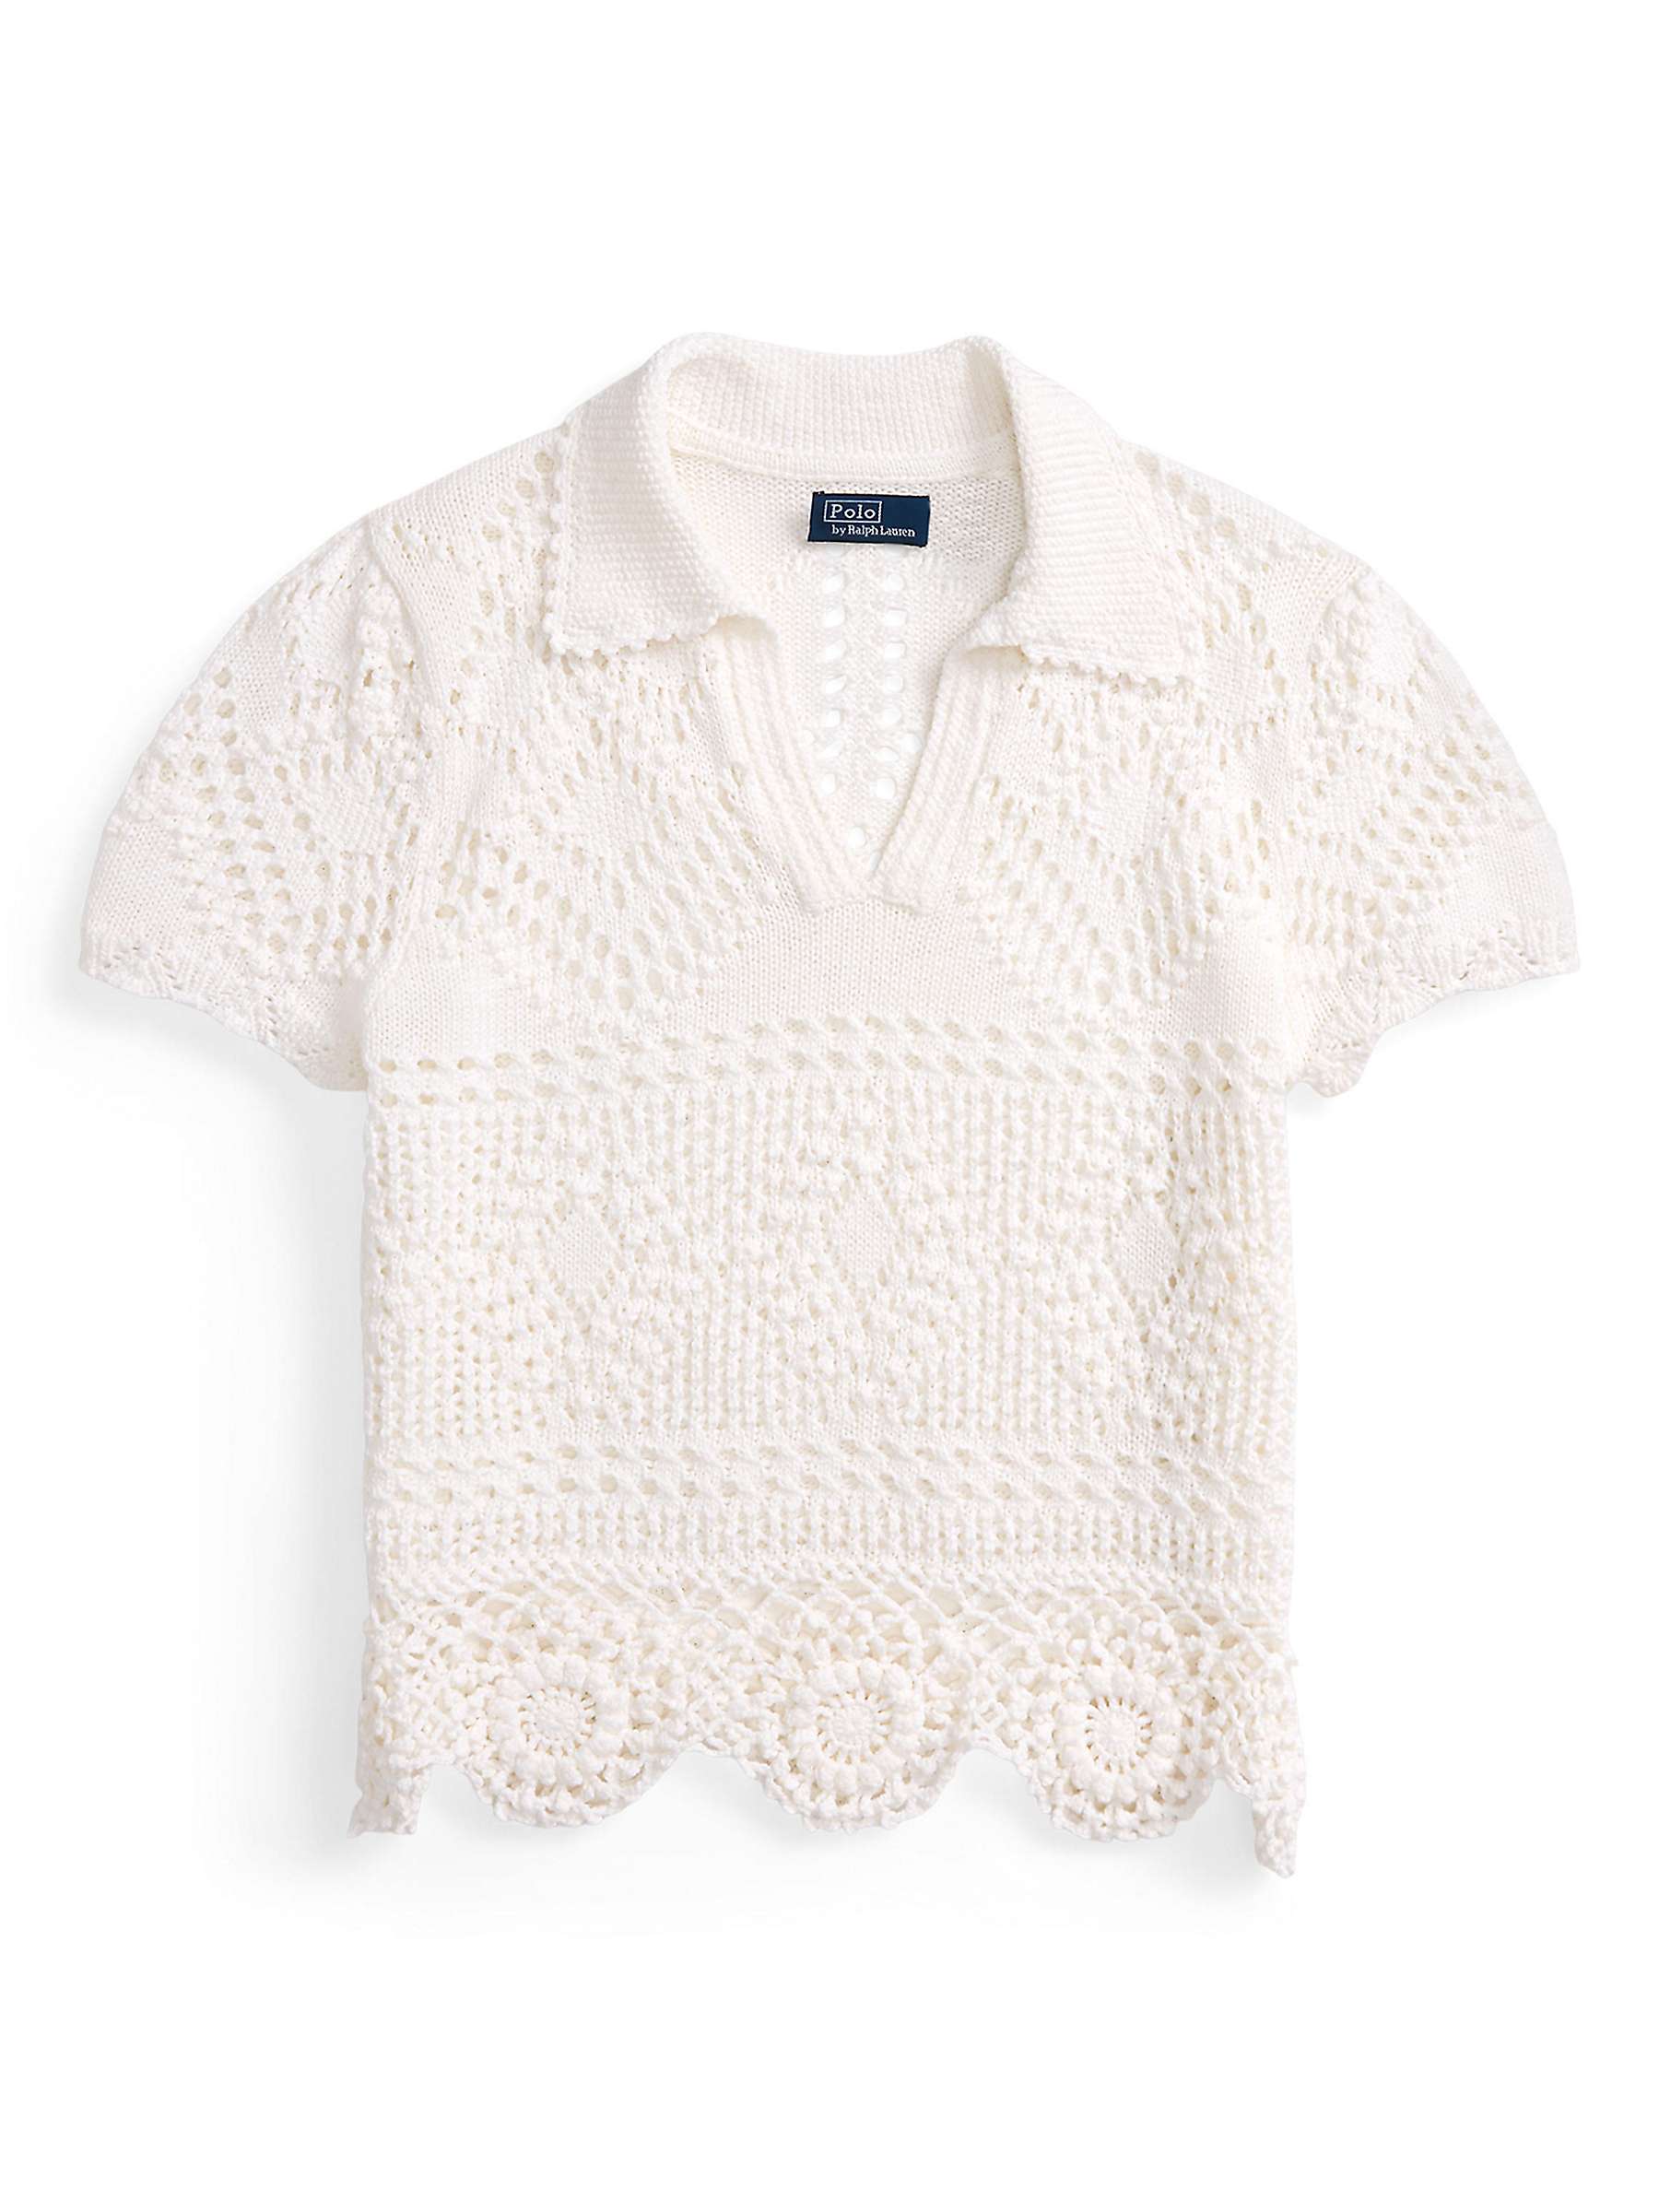 Buy Polo Ralph Lauren Pointelle Cotton Knit Top, White Online at johnlewis.com